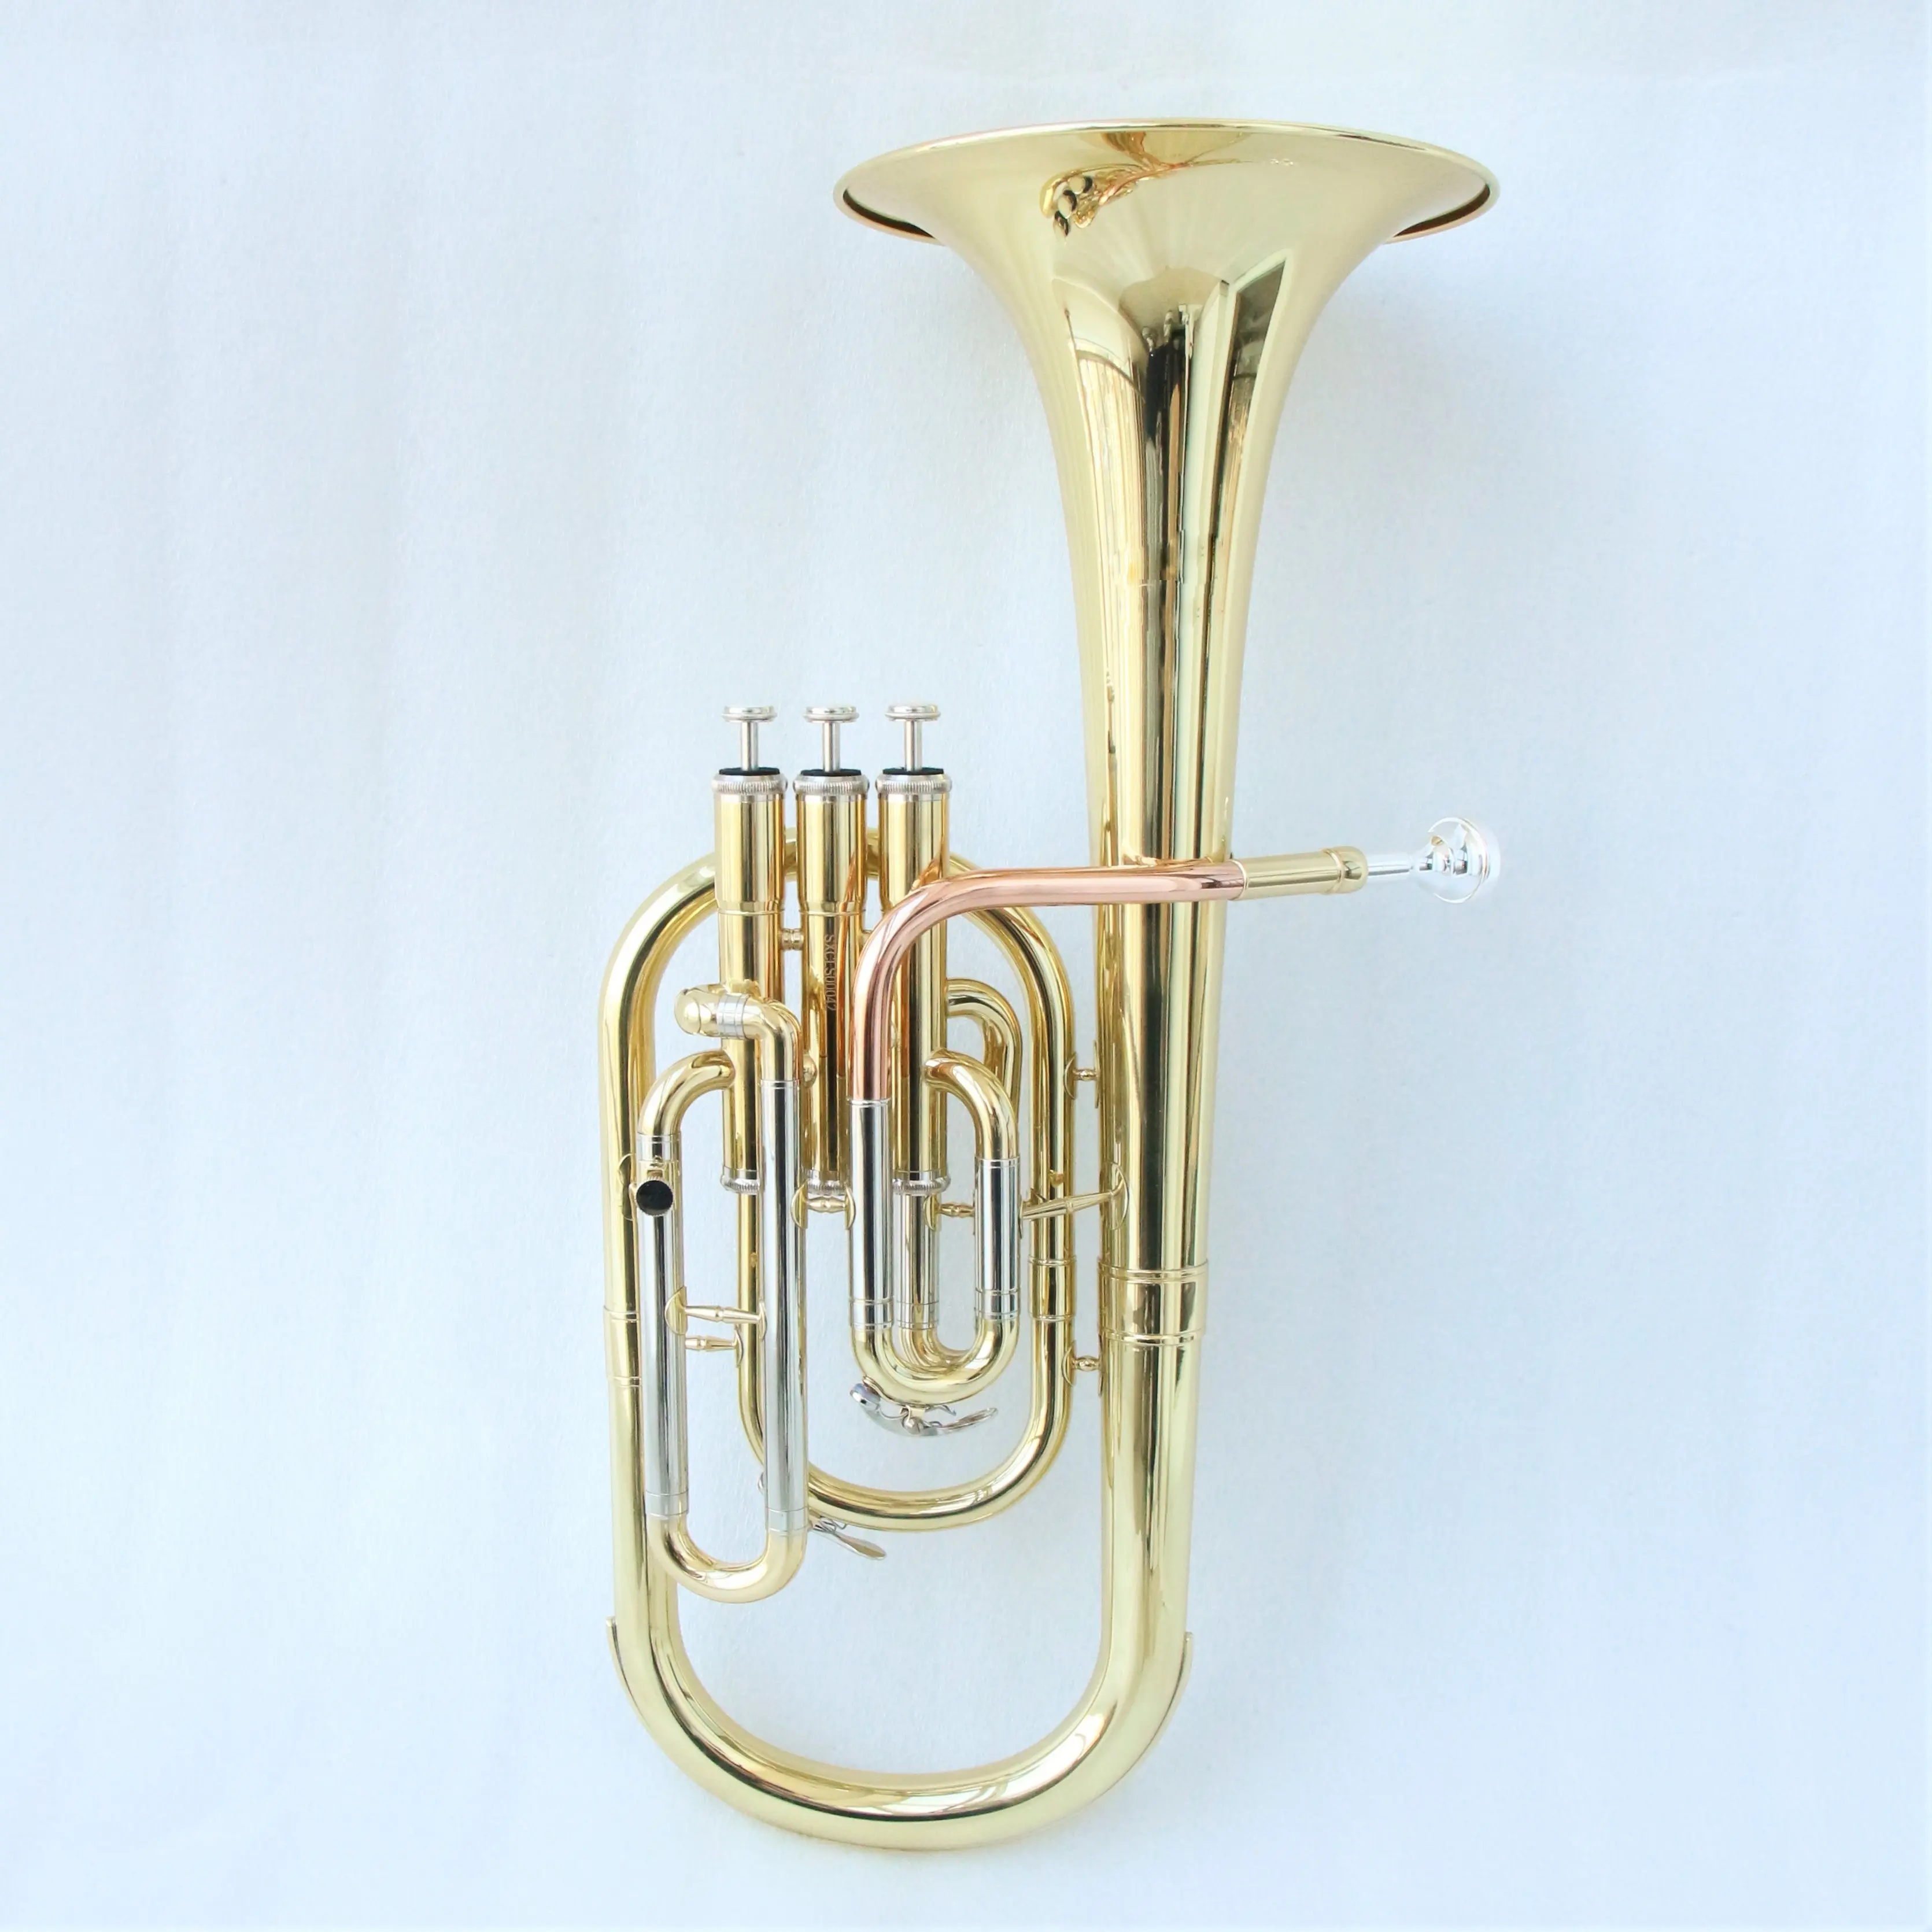 Alto grau alto chifre instrumentos musicais cópia famosa marca alto chifre instrumento ouro lacado tenor chifre